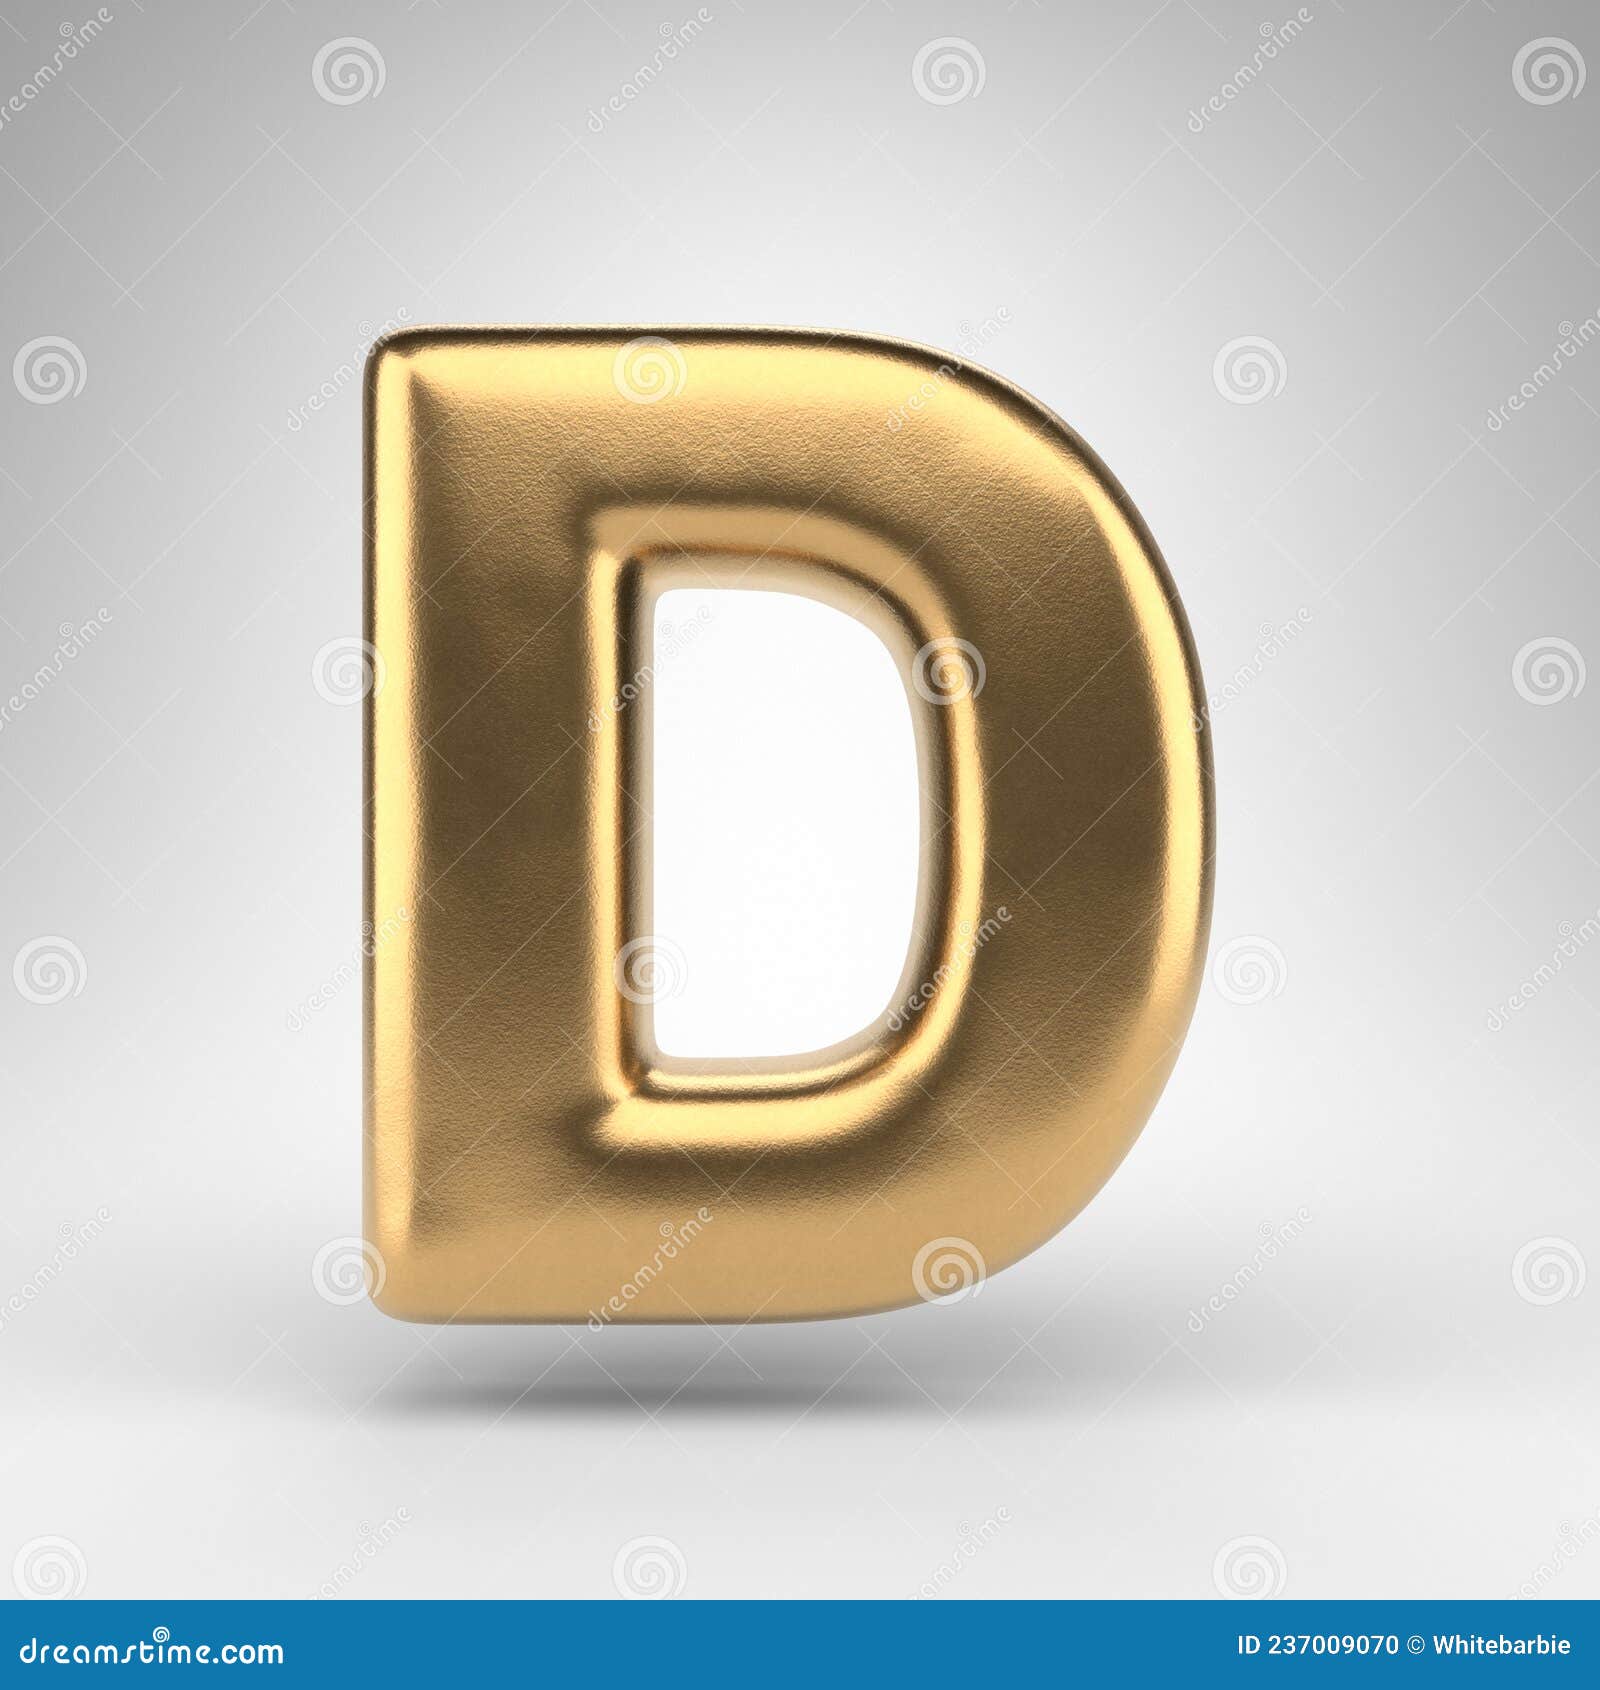 Letter D Uppercase on White Background. Golden 3D Letter with Gloss ...